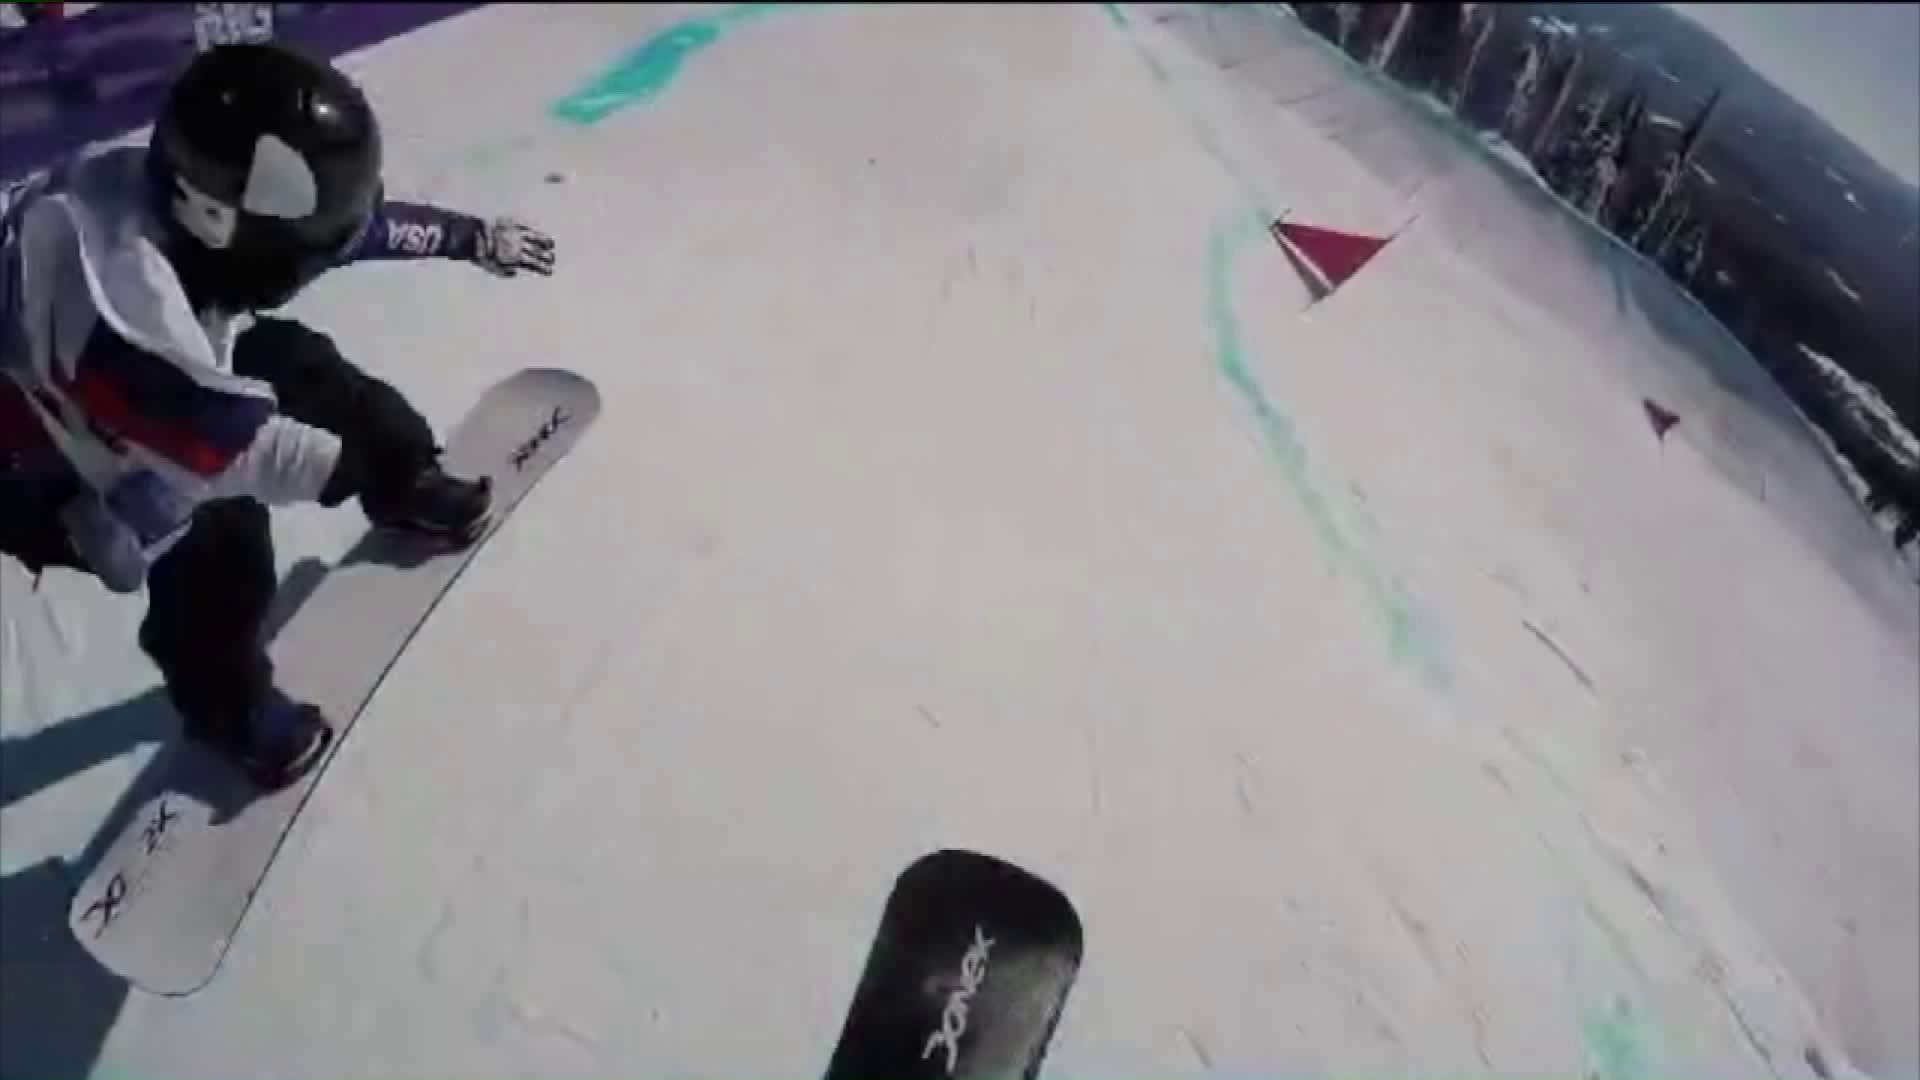 Mike Minor Snowboarding Paralympian